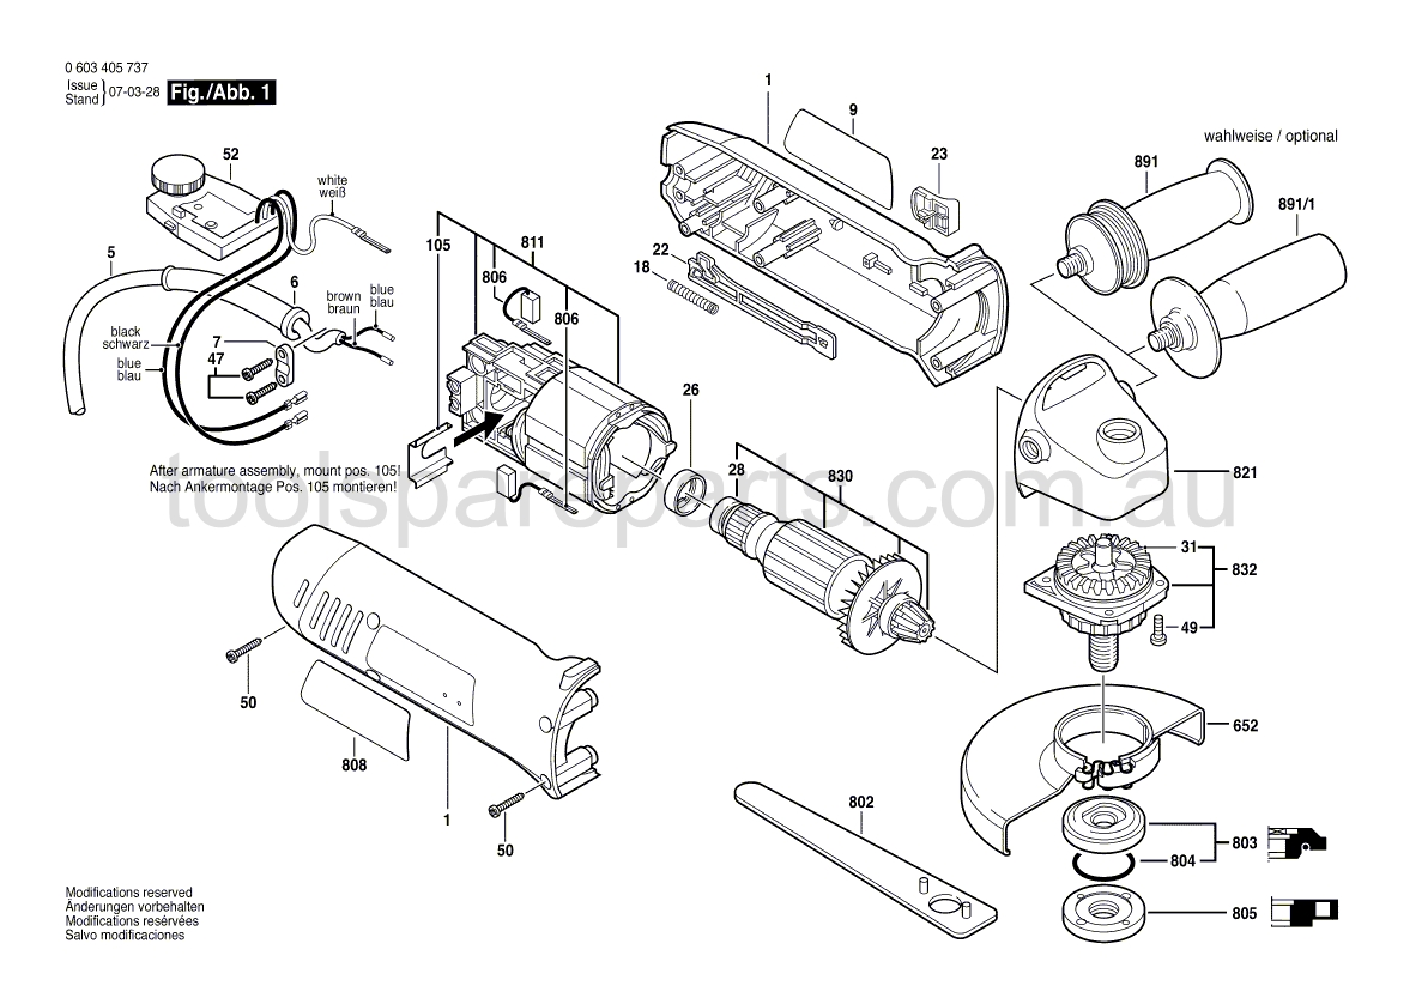 Bosch PWS 9-125 CE 0603405737  Diagram 1